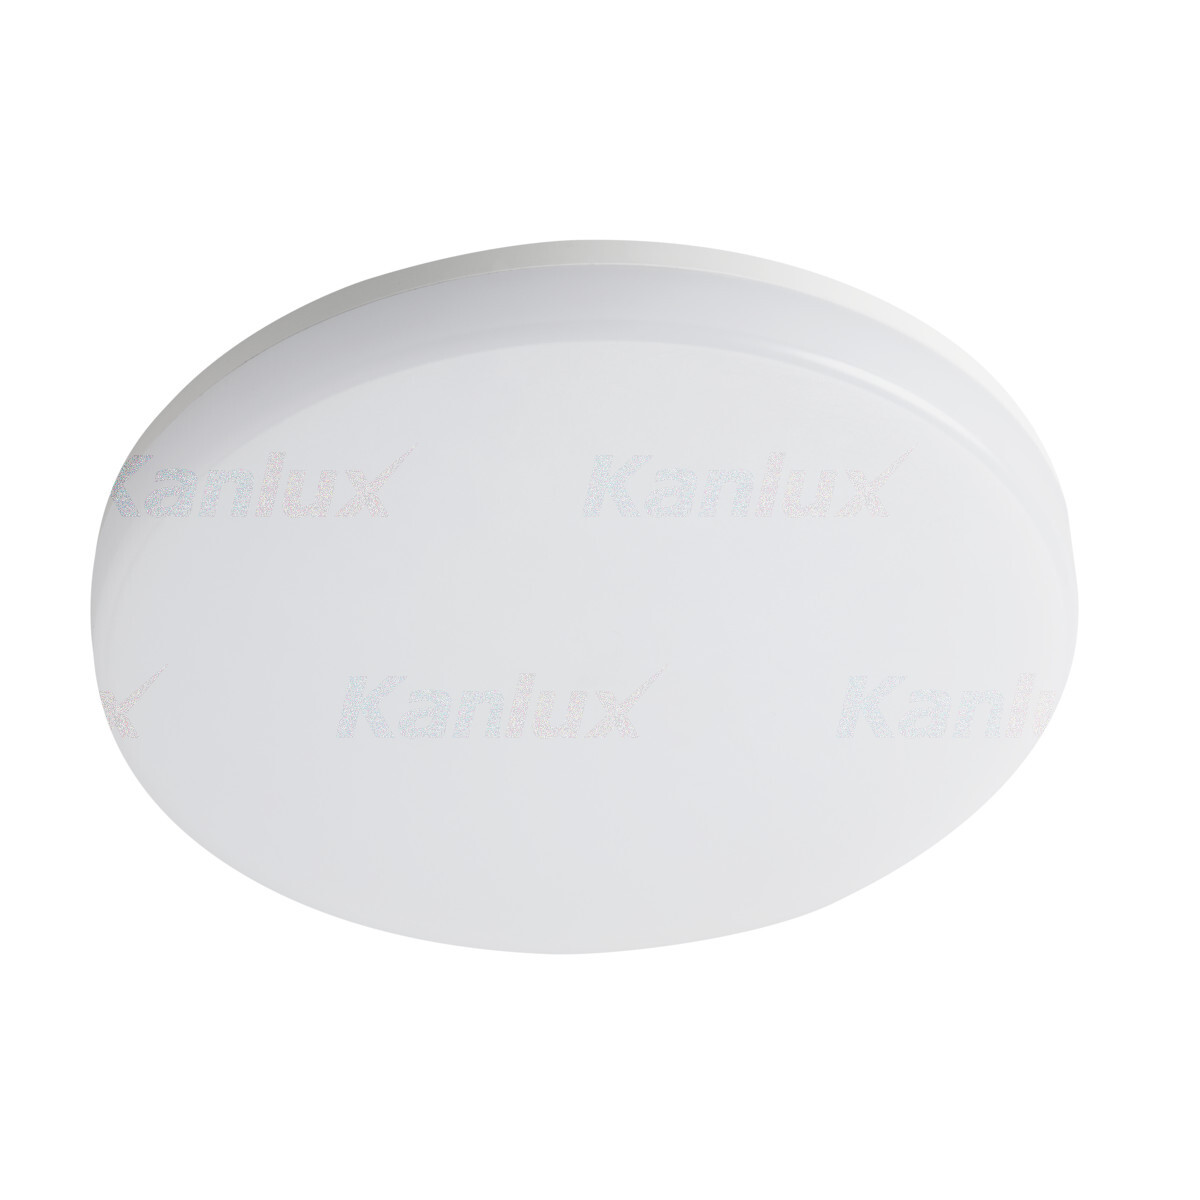 Уличный потолочный светильник Kanlux VARSO 26985, цвет белый